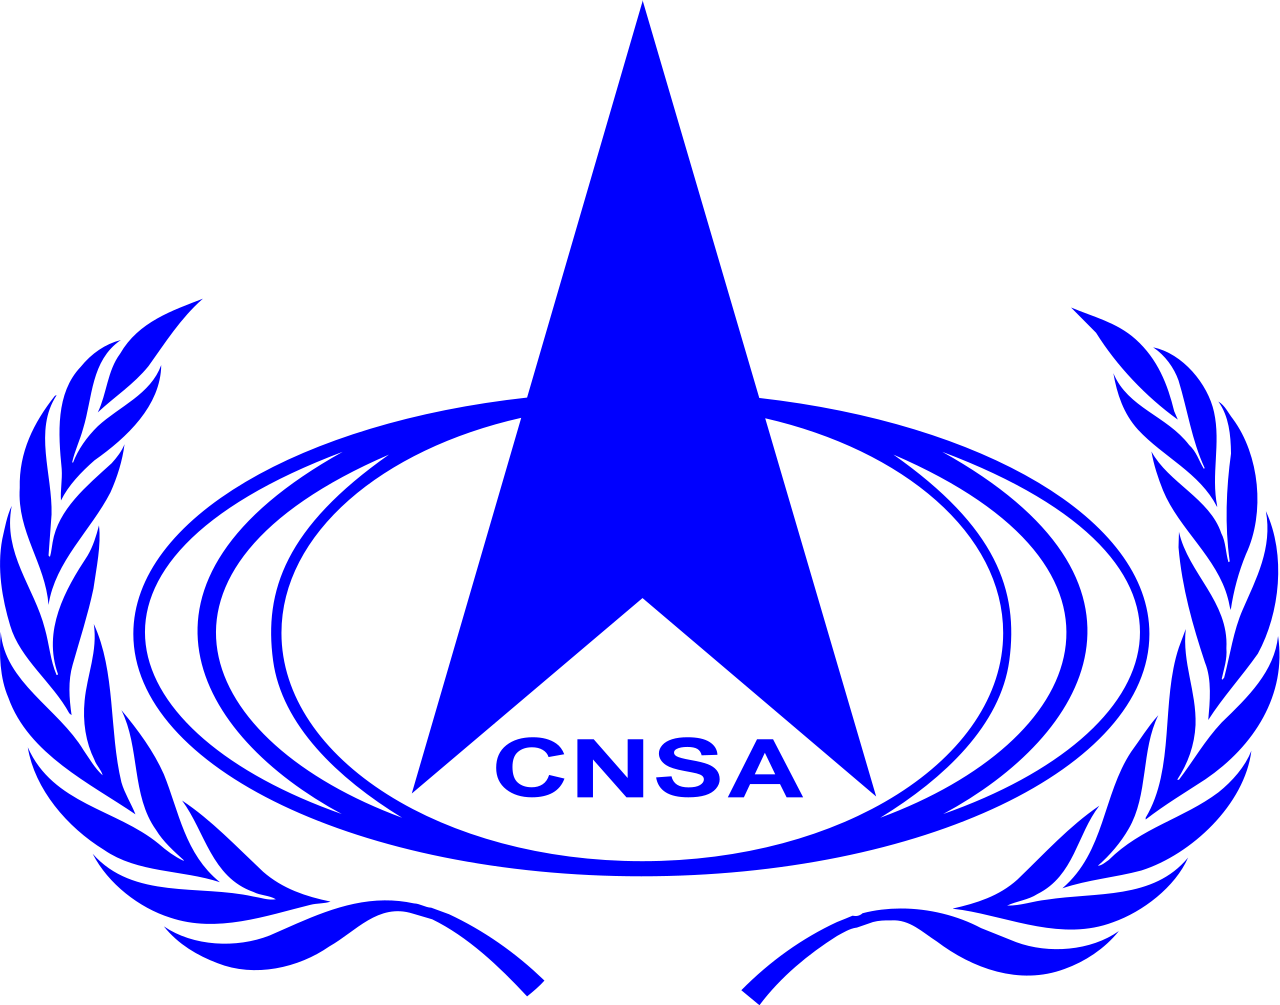 CNSA - Chang'e - Чанъэ - китайская автоматическая межпланетная станция